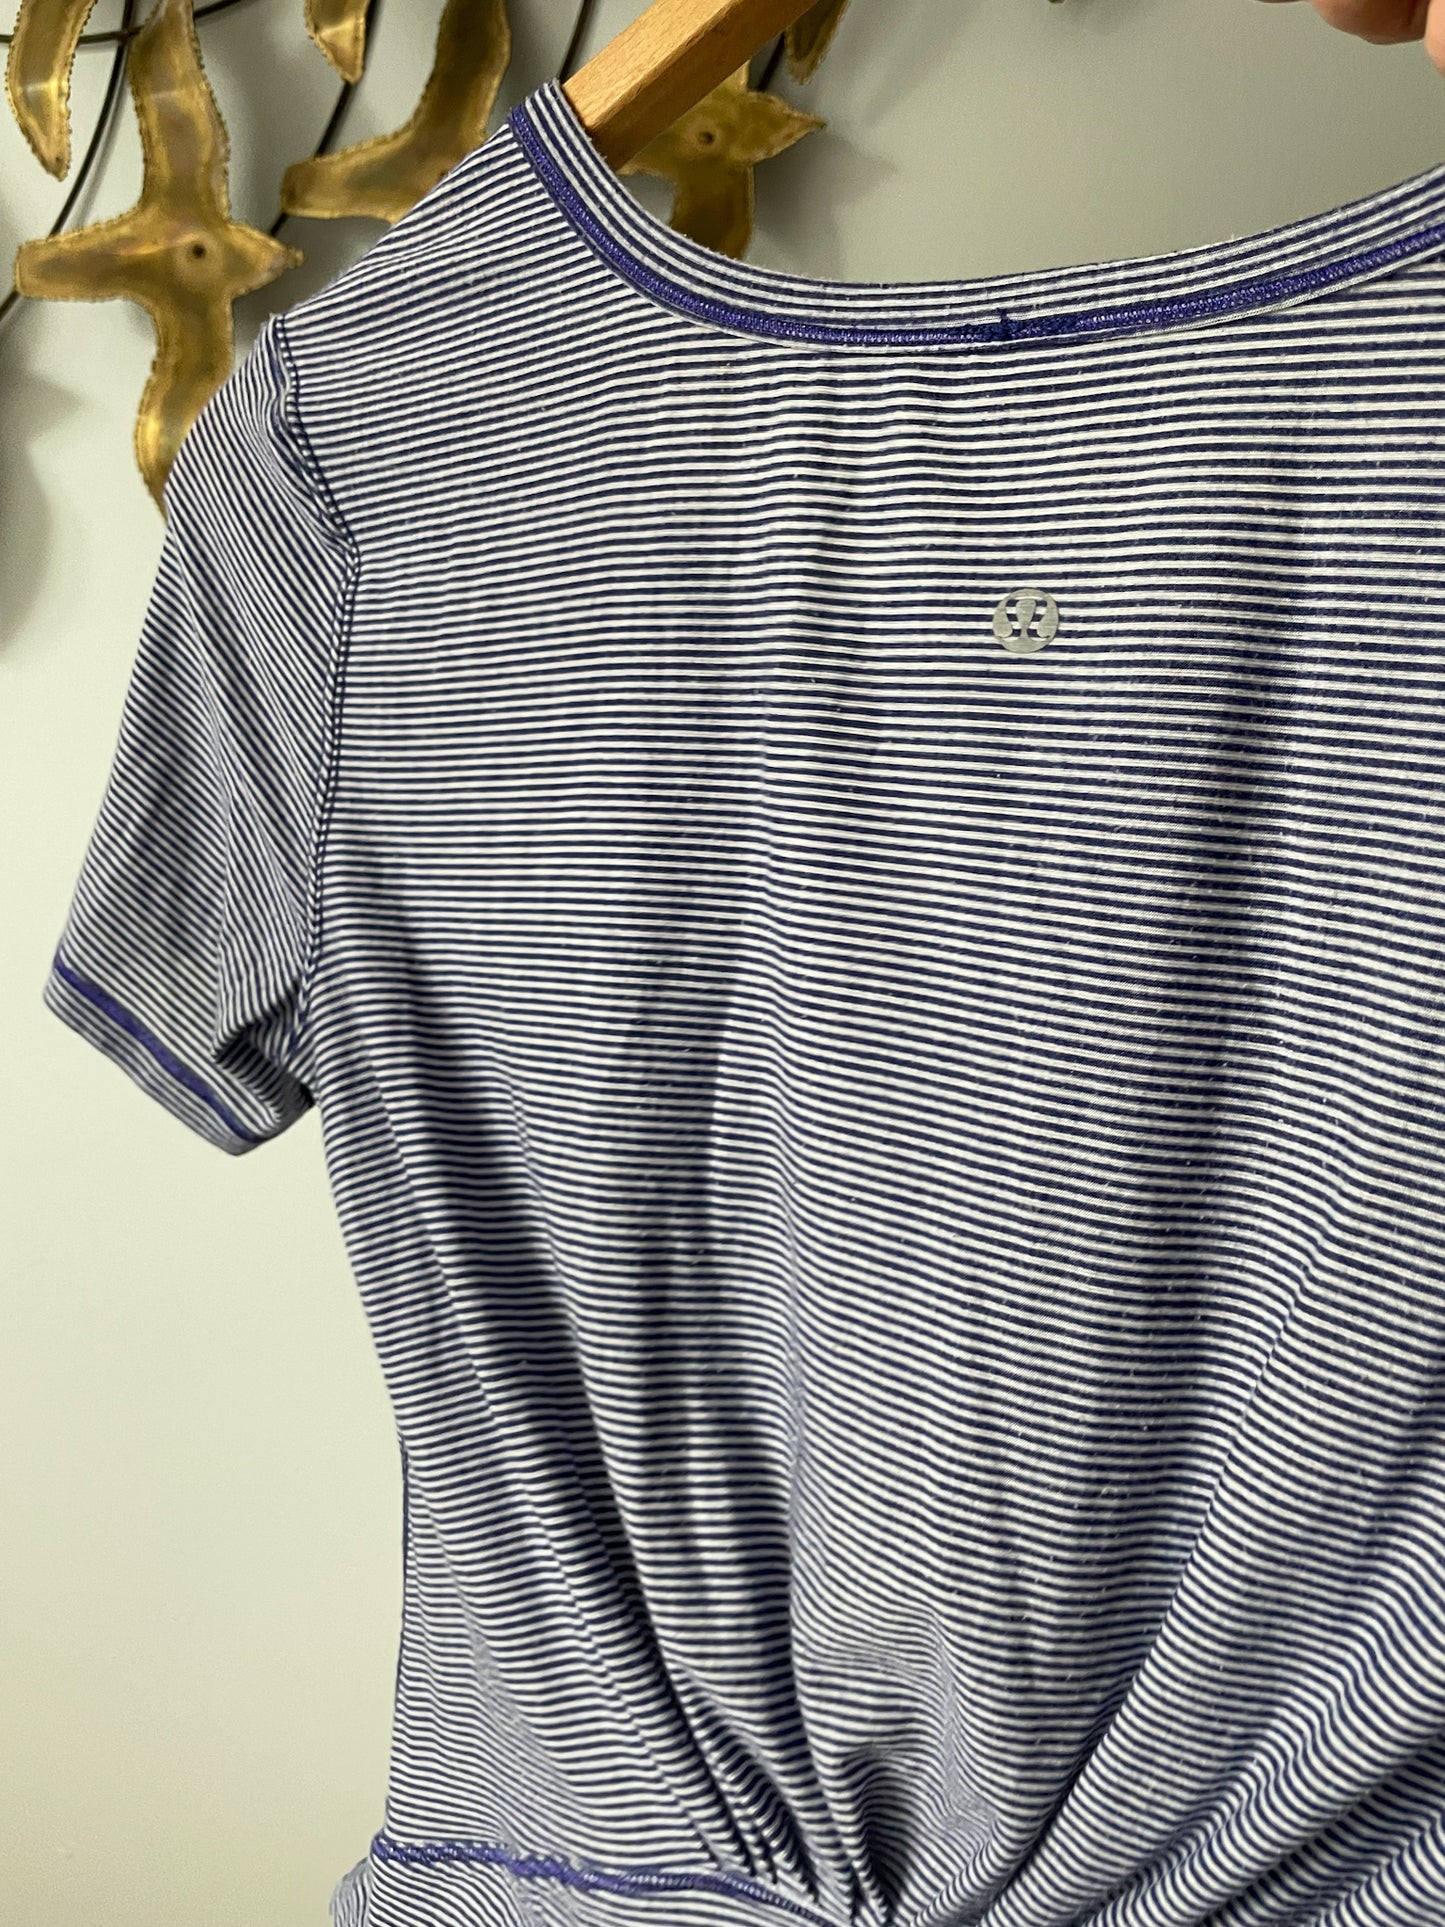 Lululemon Blue Purple Stripe Cropped Back Athletic T-Shirt Top - Small